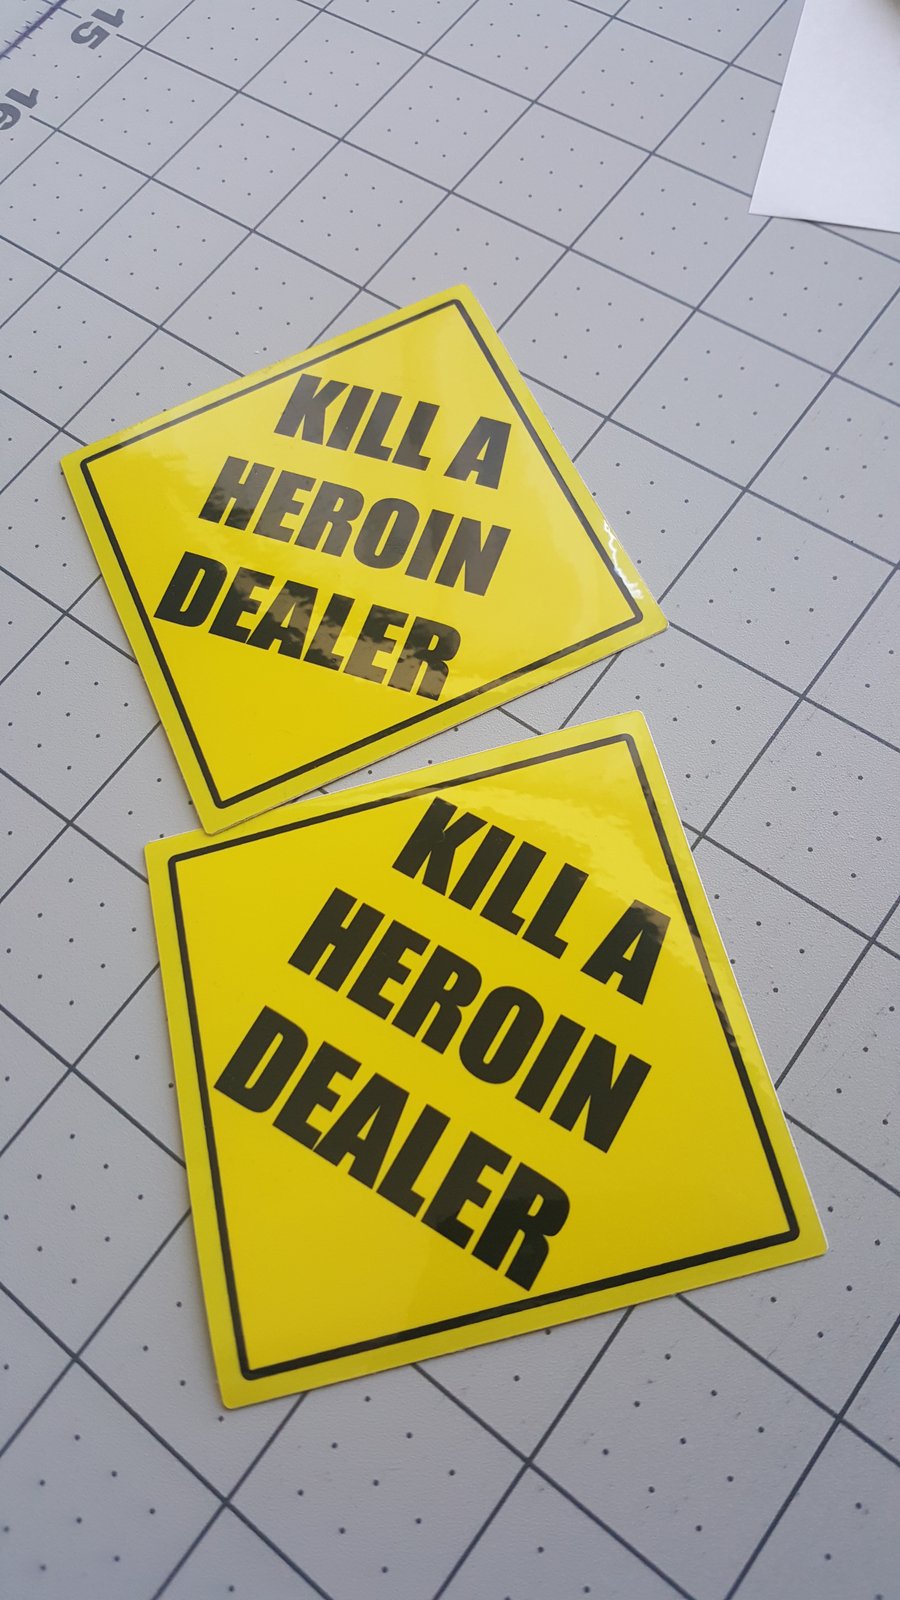 Image of Kill a Heroin Dealer sticker